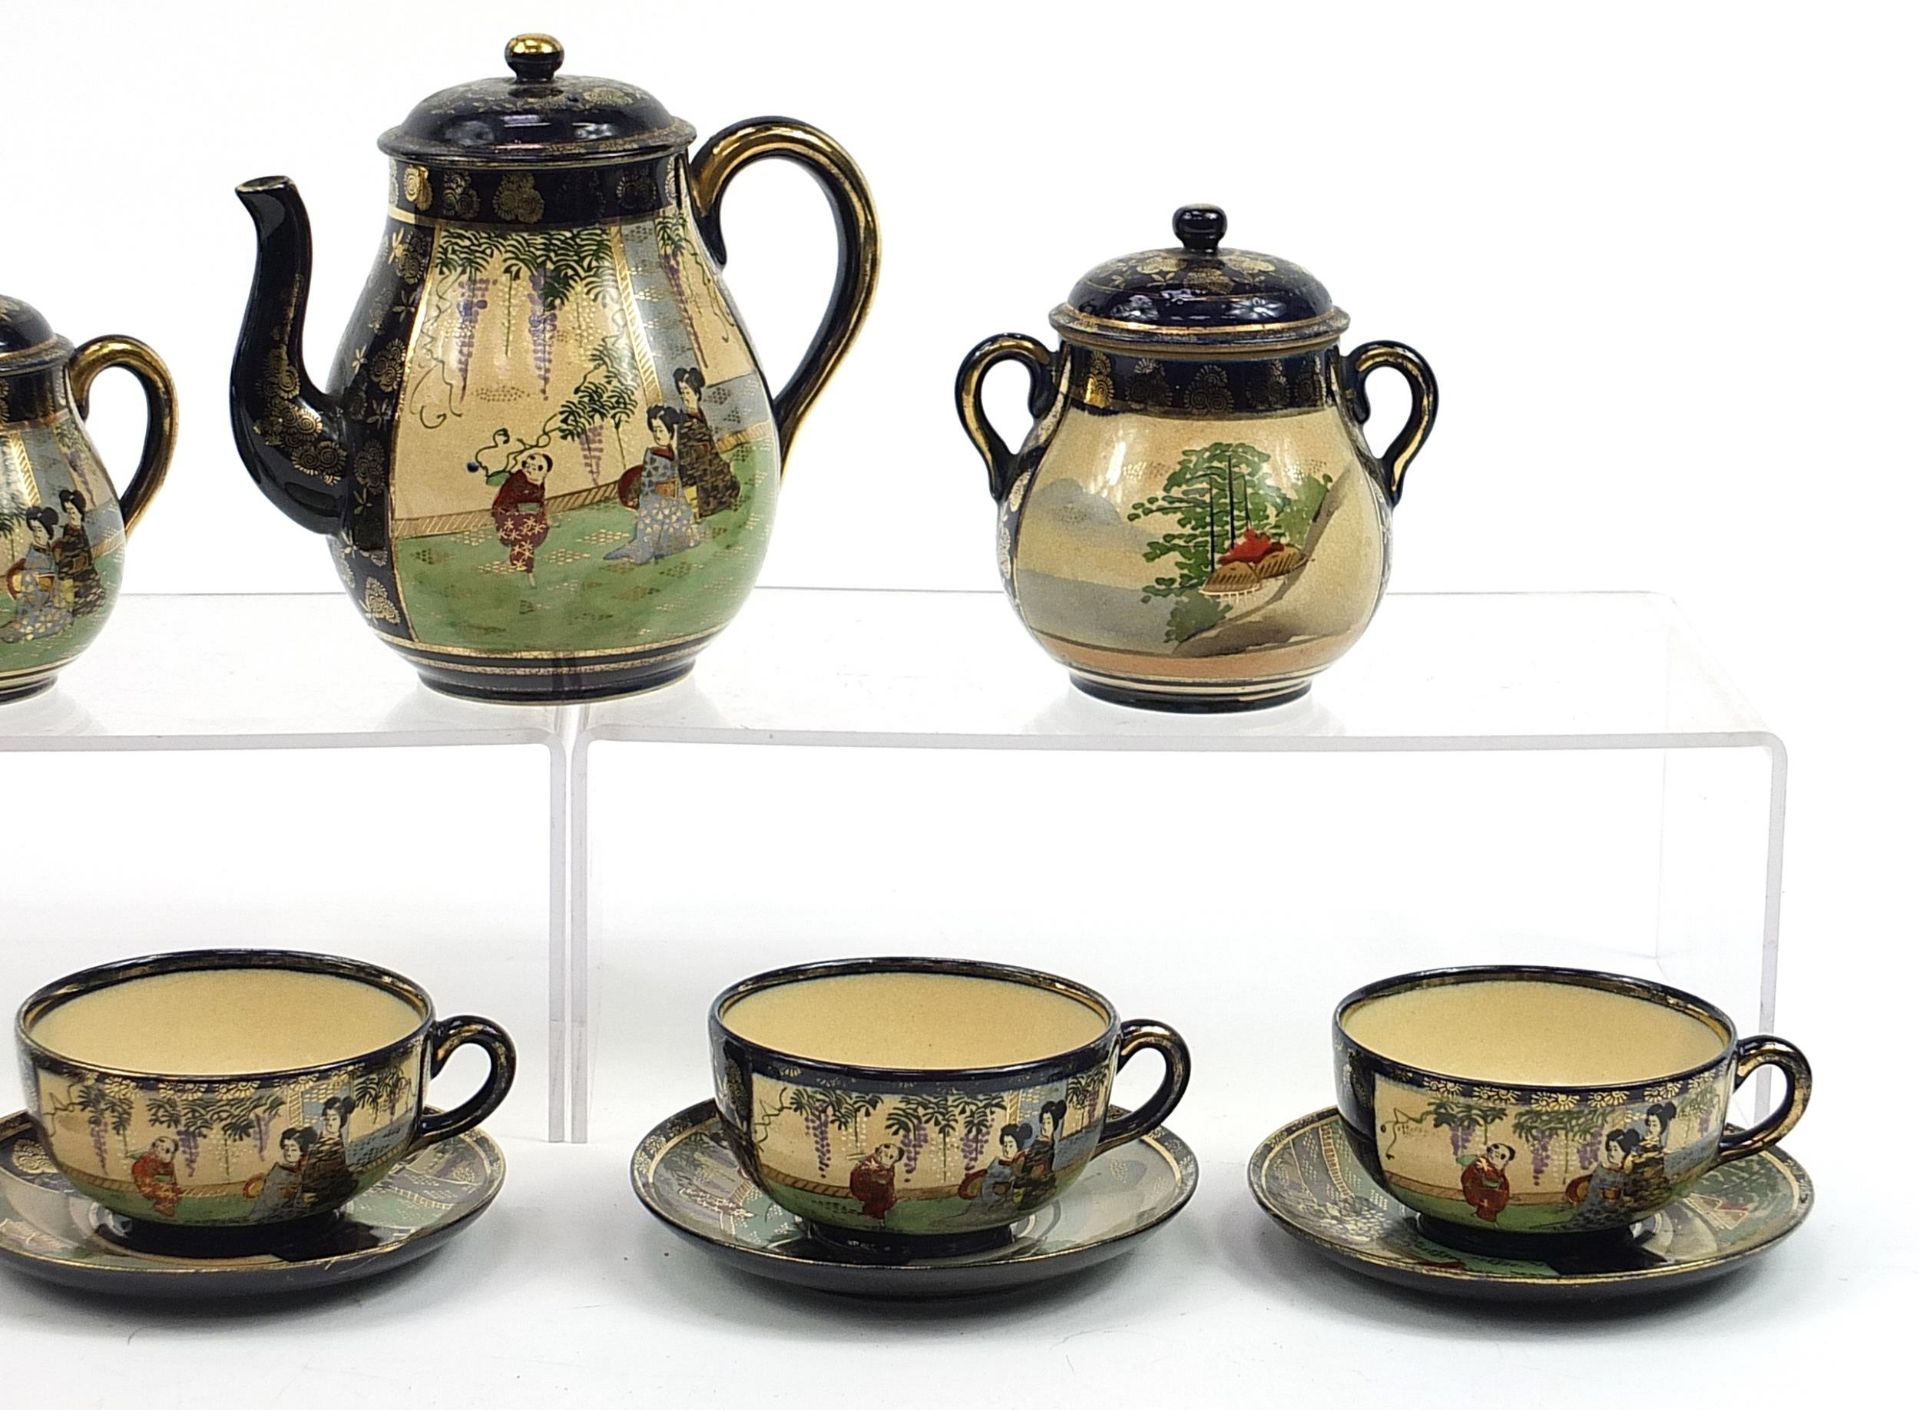 Japanese Satsuma part tea service including teapot, sugar bowl and milk jug, the teapot 16cm high - Image 3 of 4